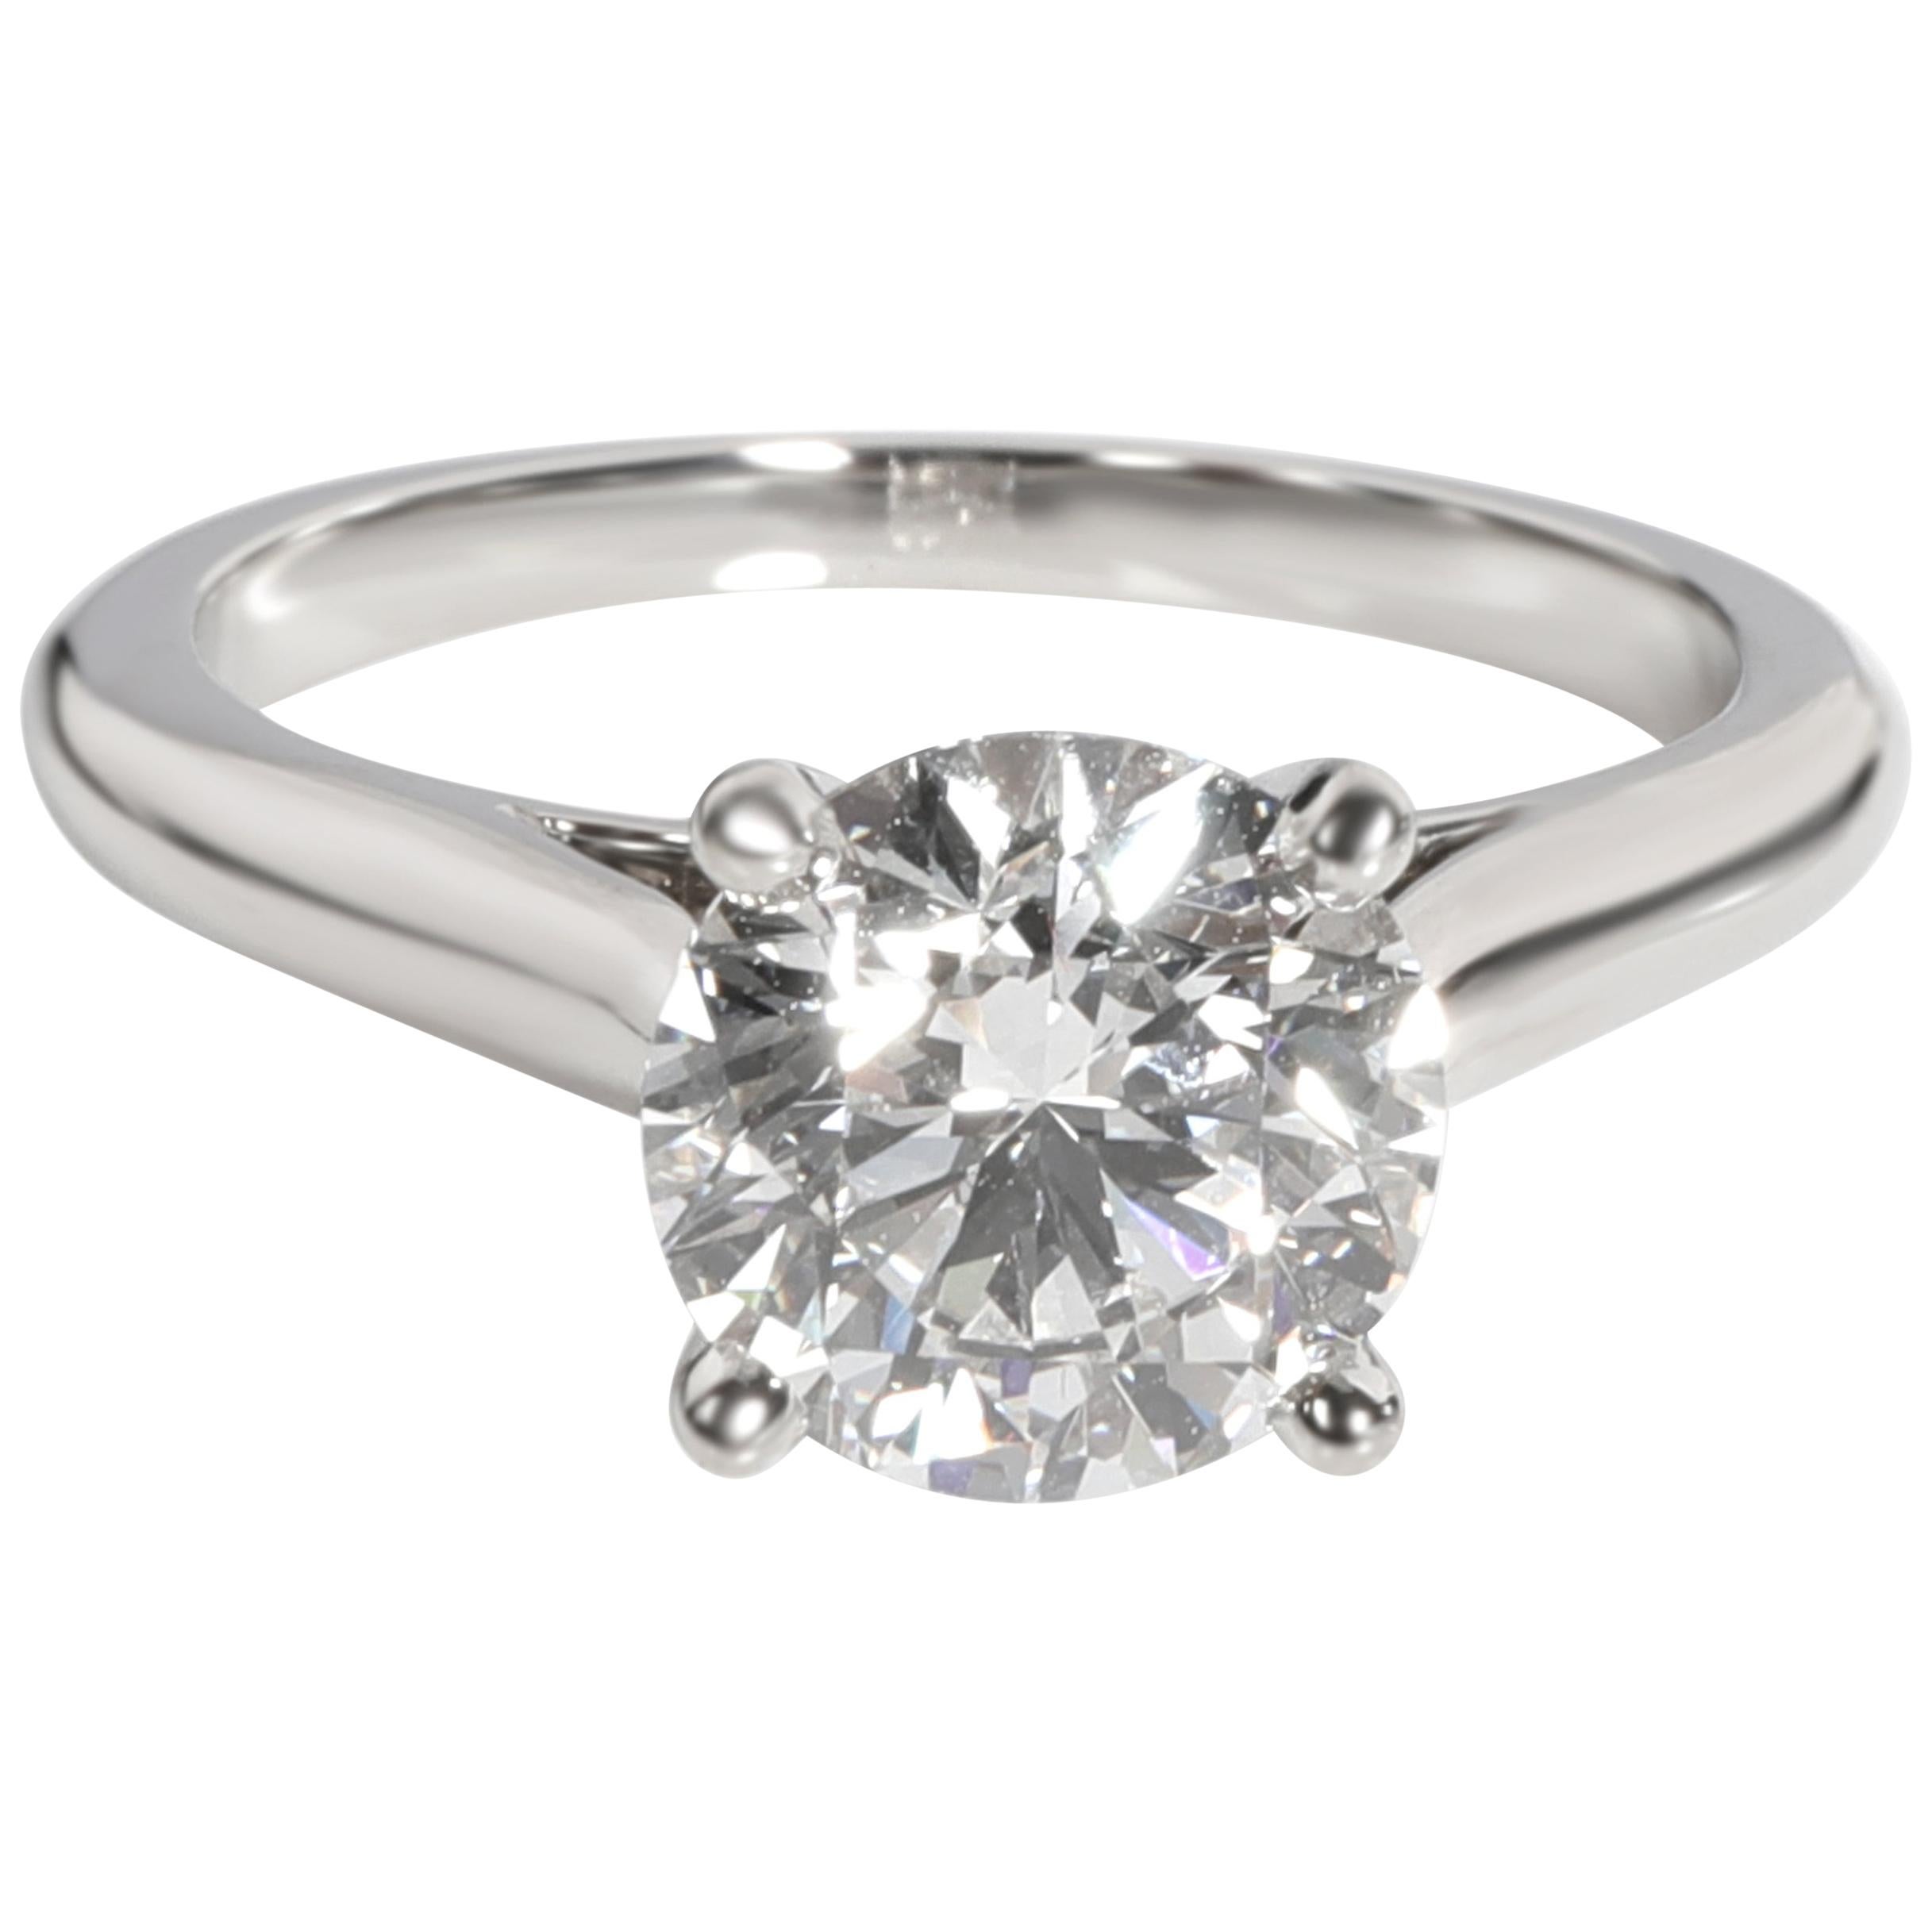 Cartier 1895 Solitaire Diamond Engagement Ring in Platinum E VVS2 1.78 Carat